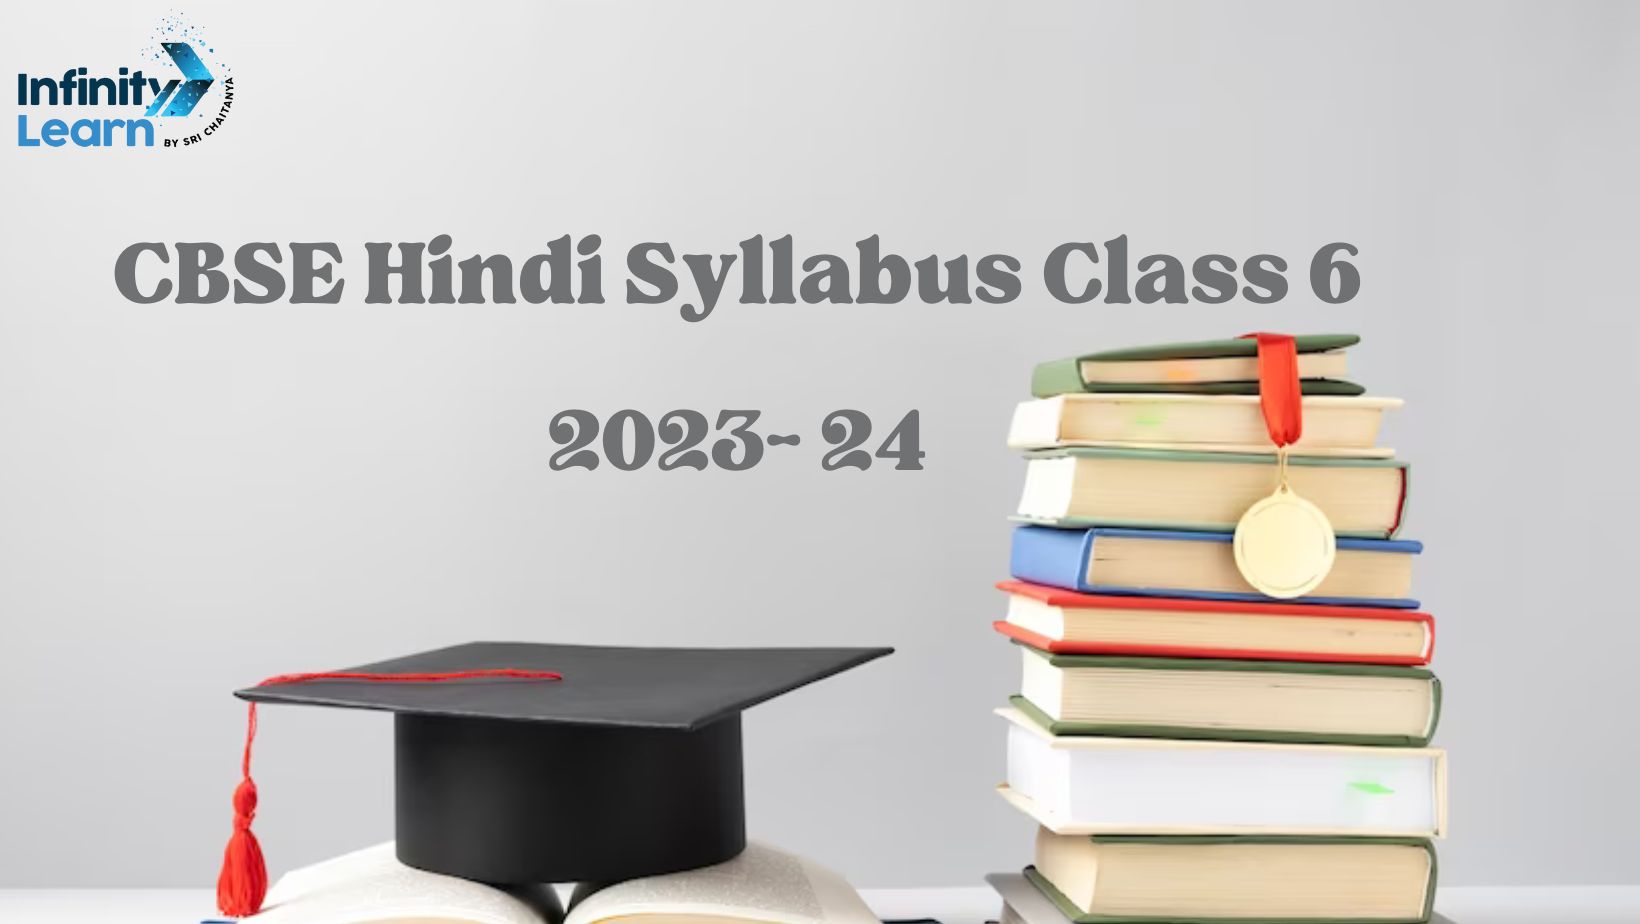 CBSE Hindi Syllabus Class 6